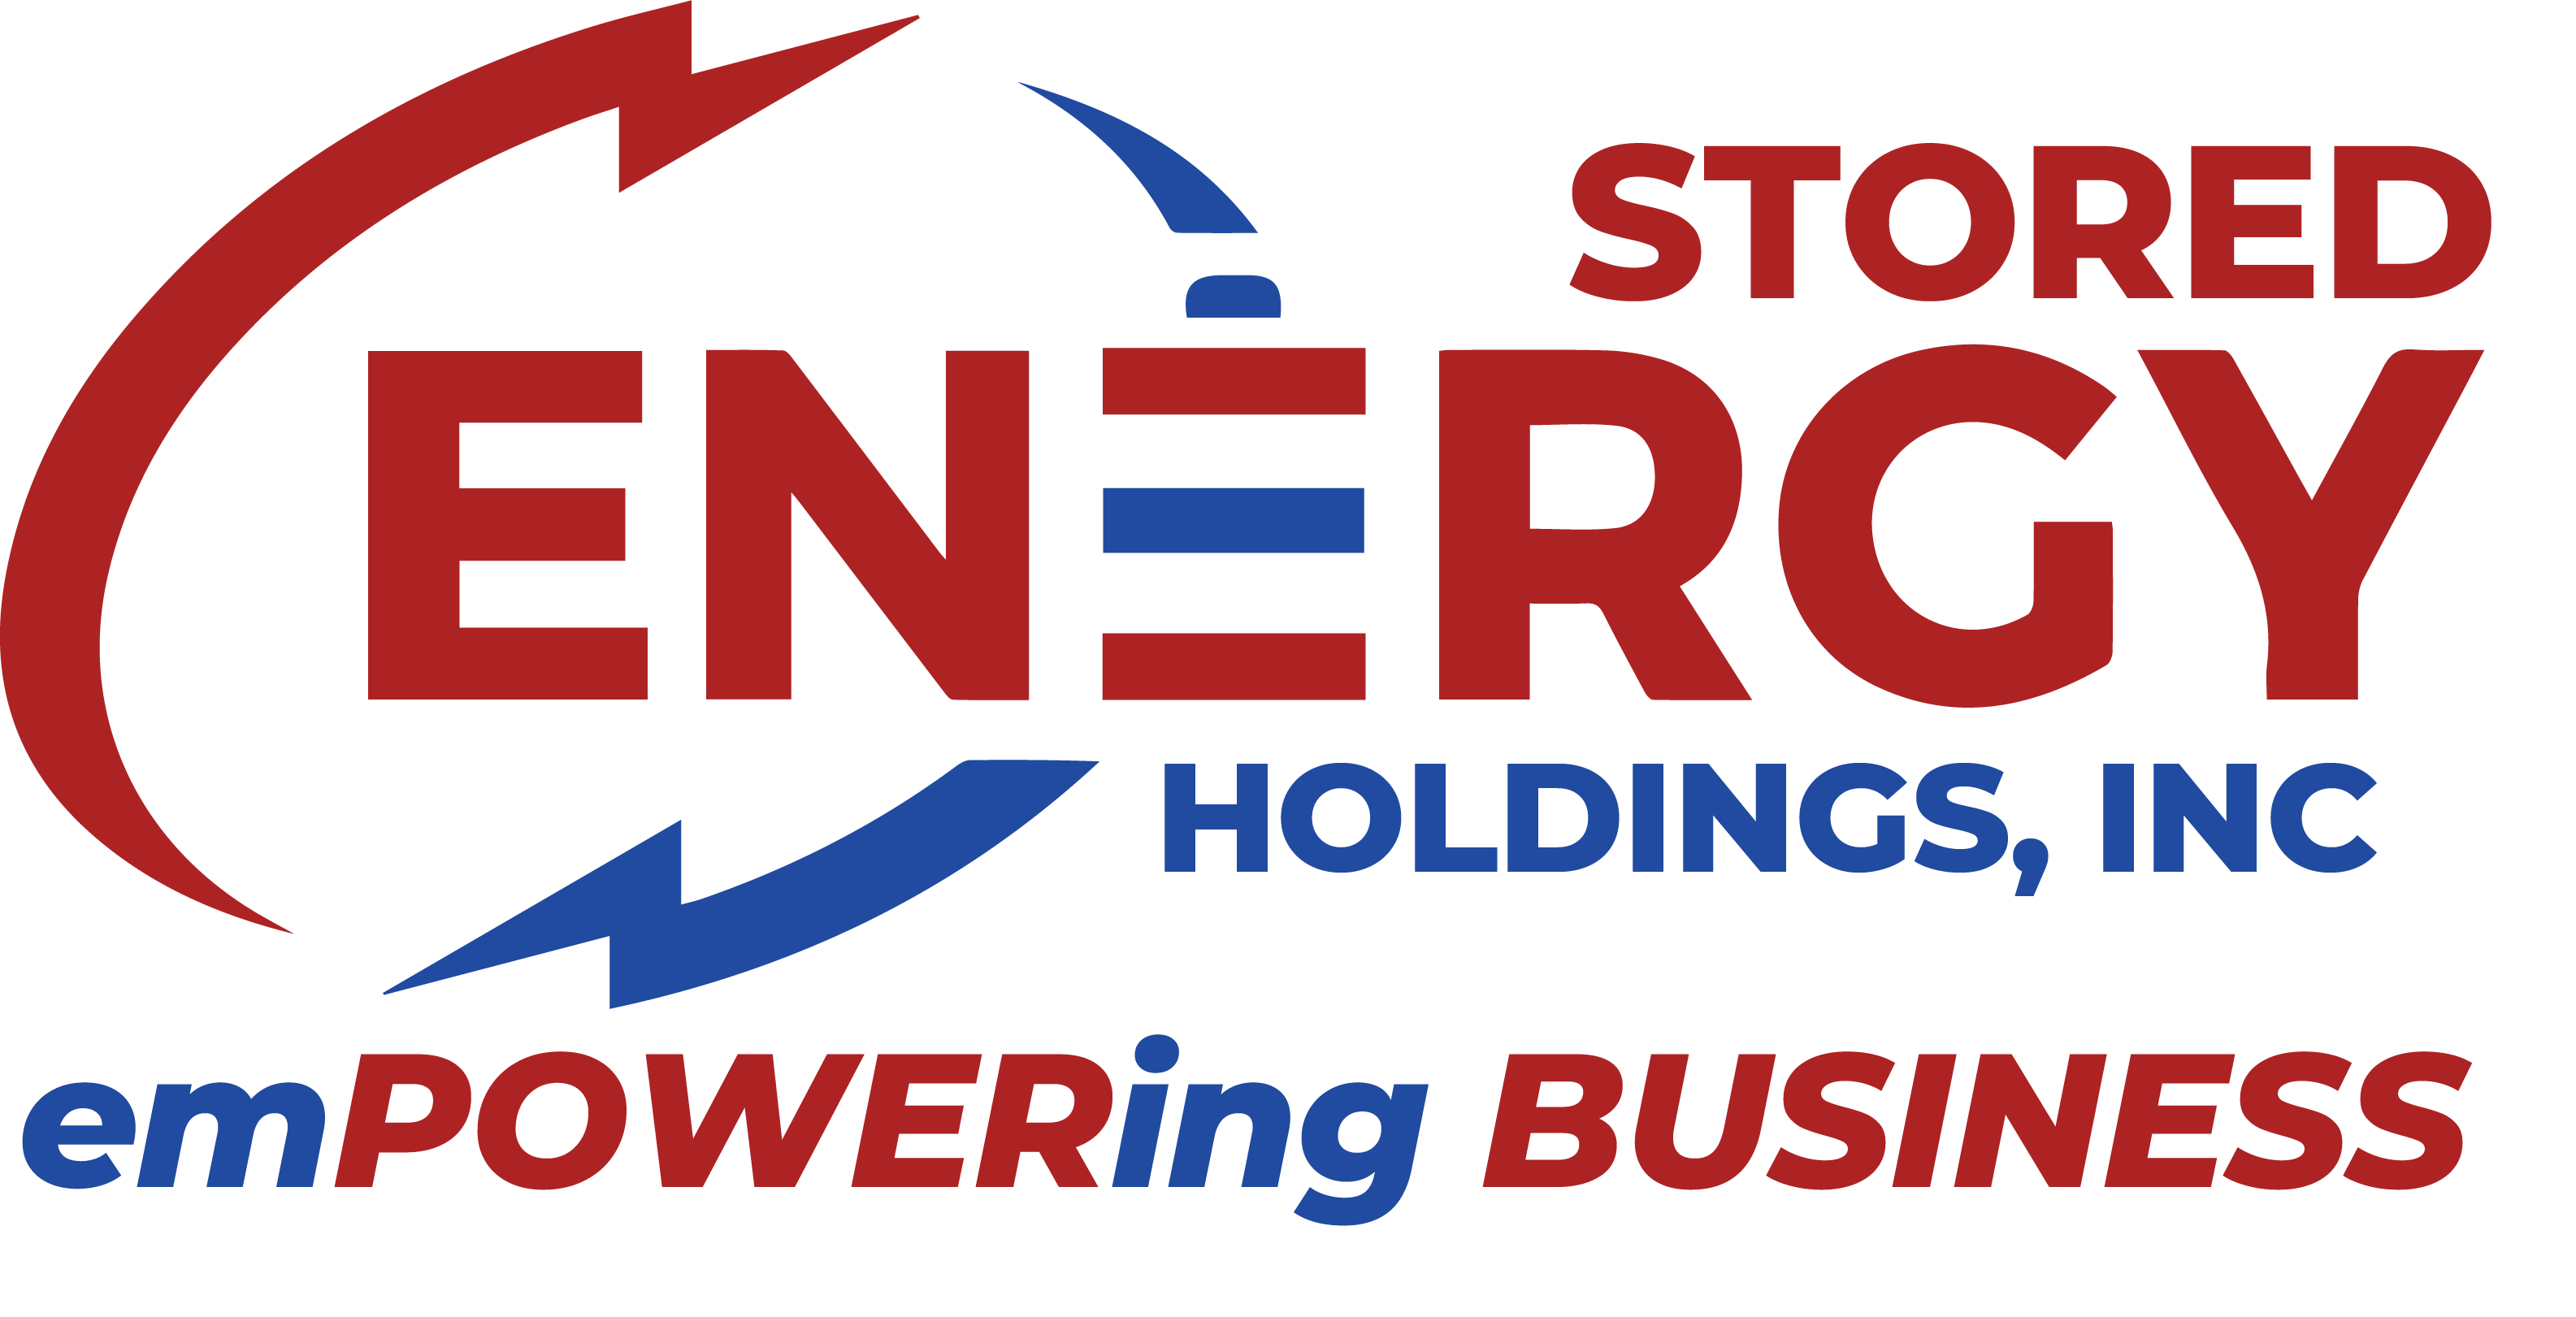 Stored Energy Holdings, Inc